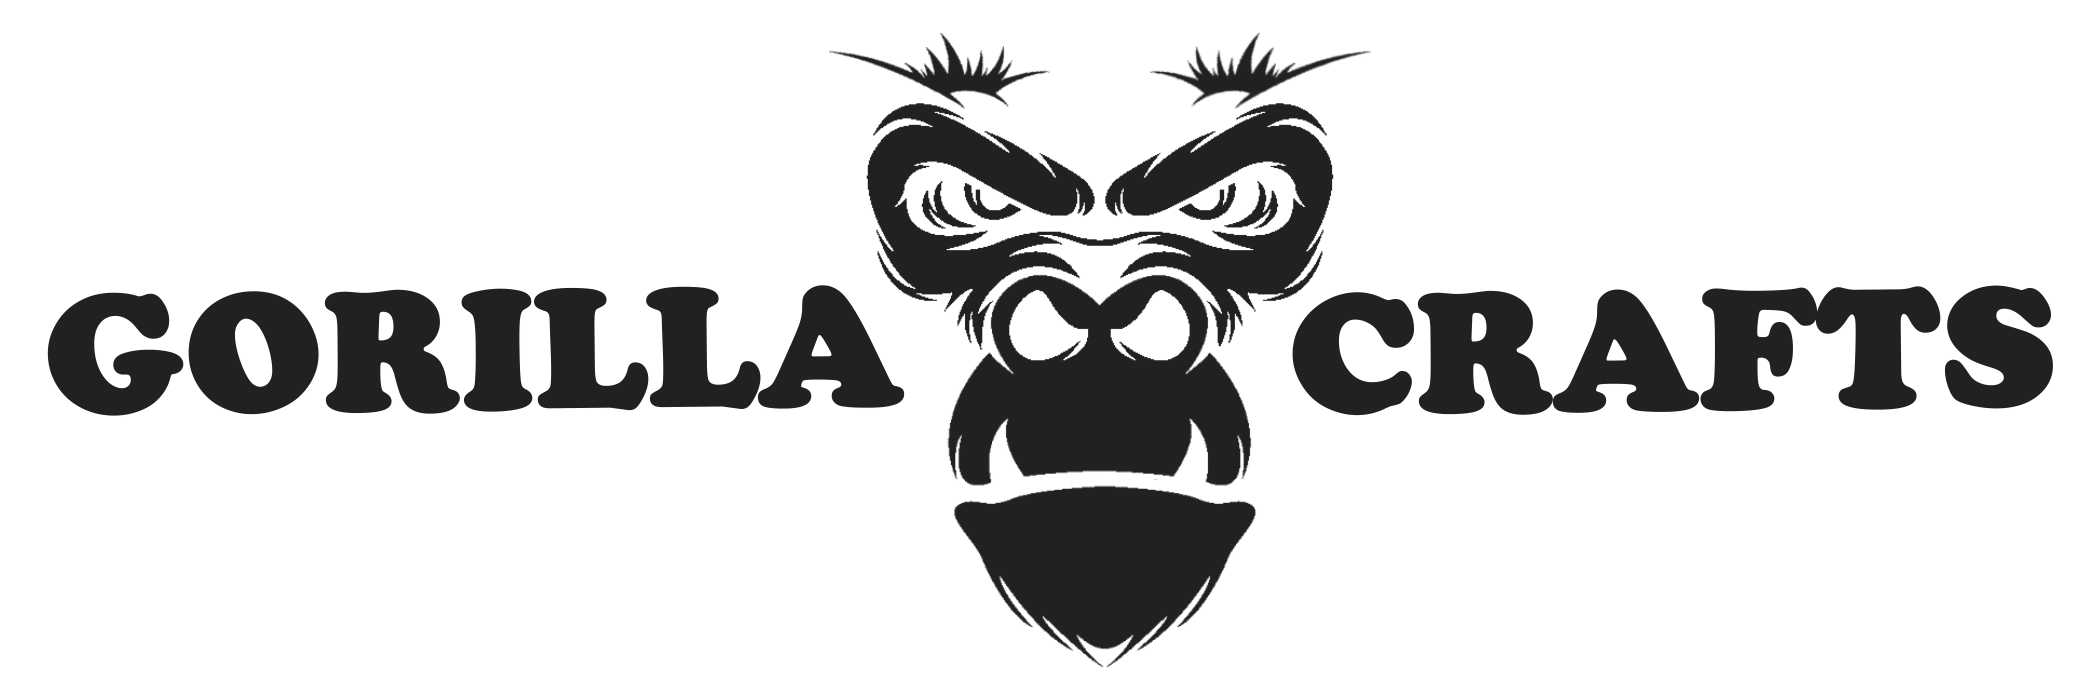 Gorilla Crafts Logo